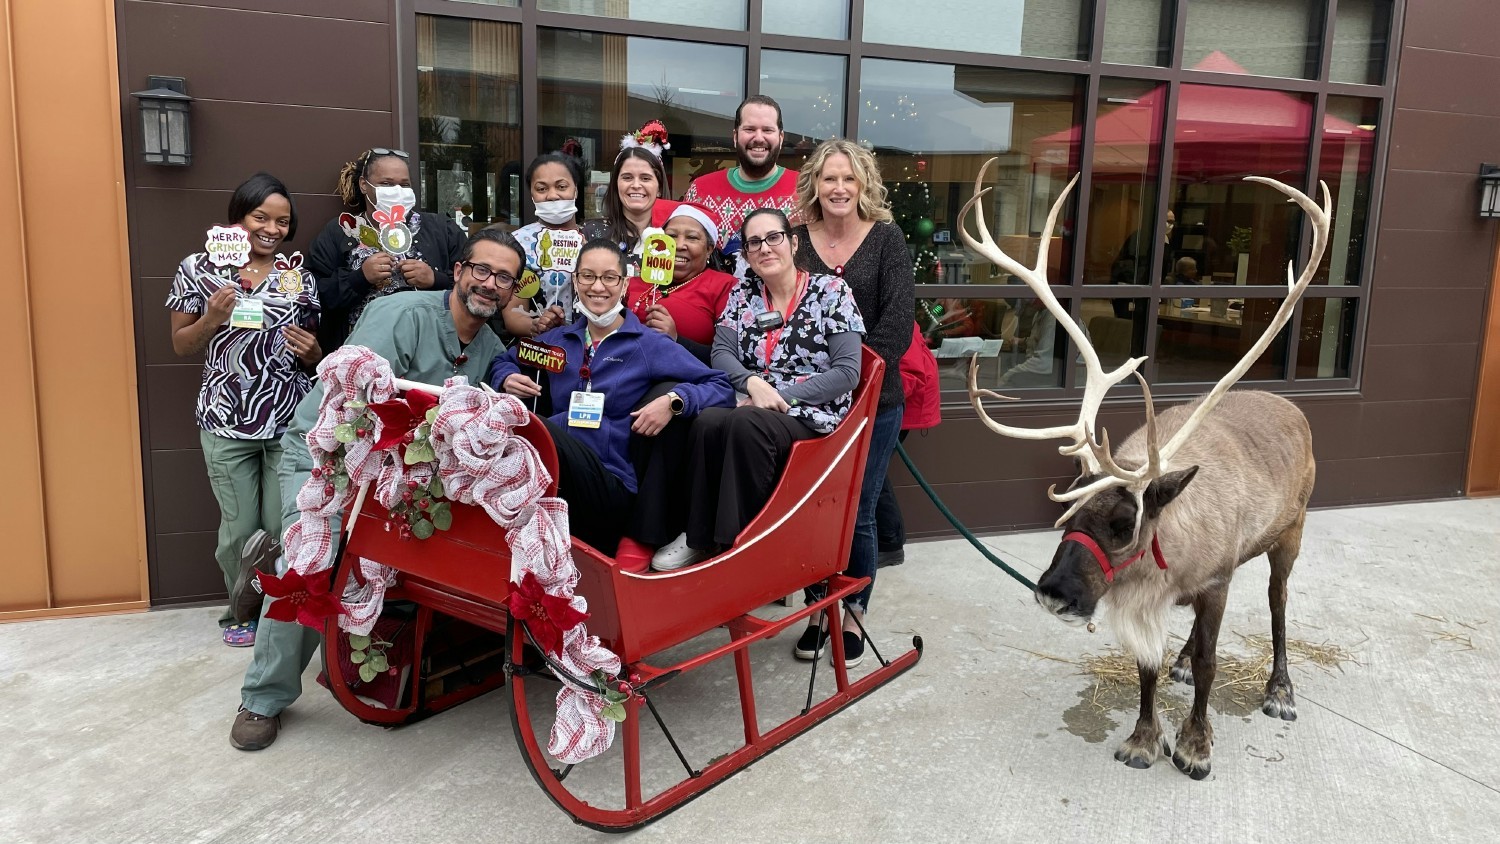 Annual staff reindeer event